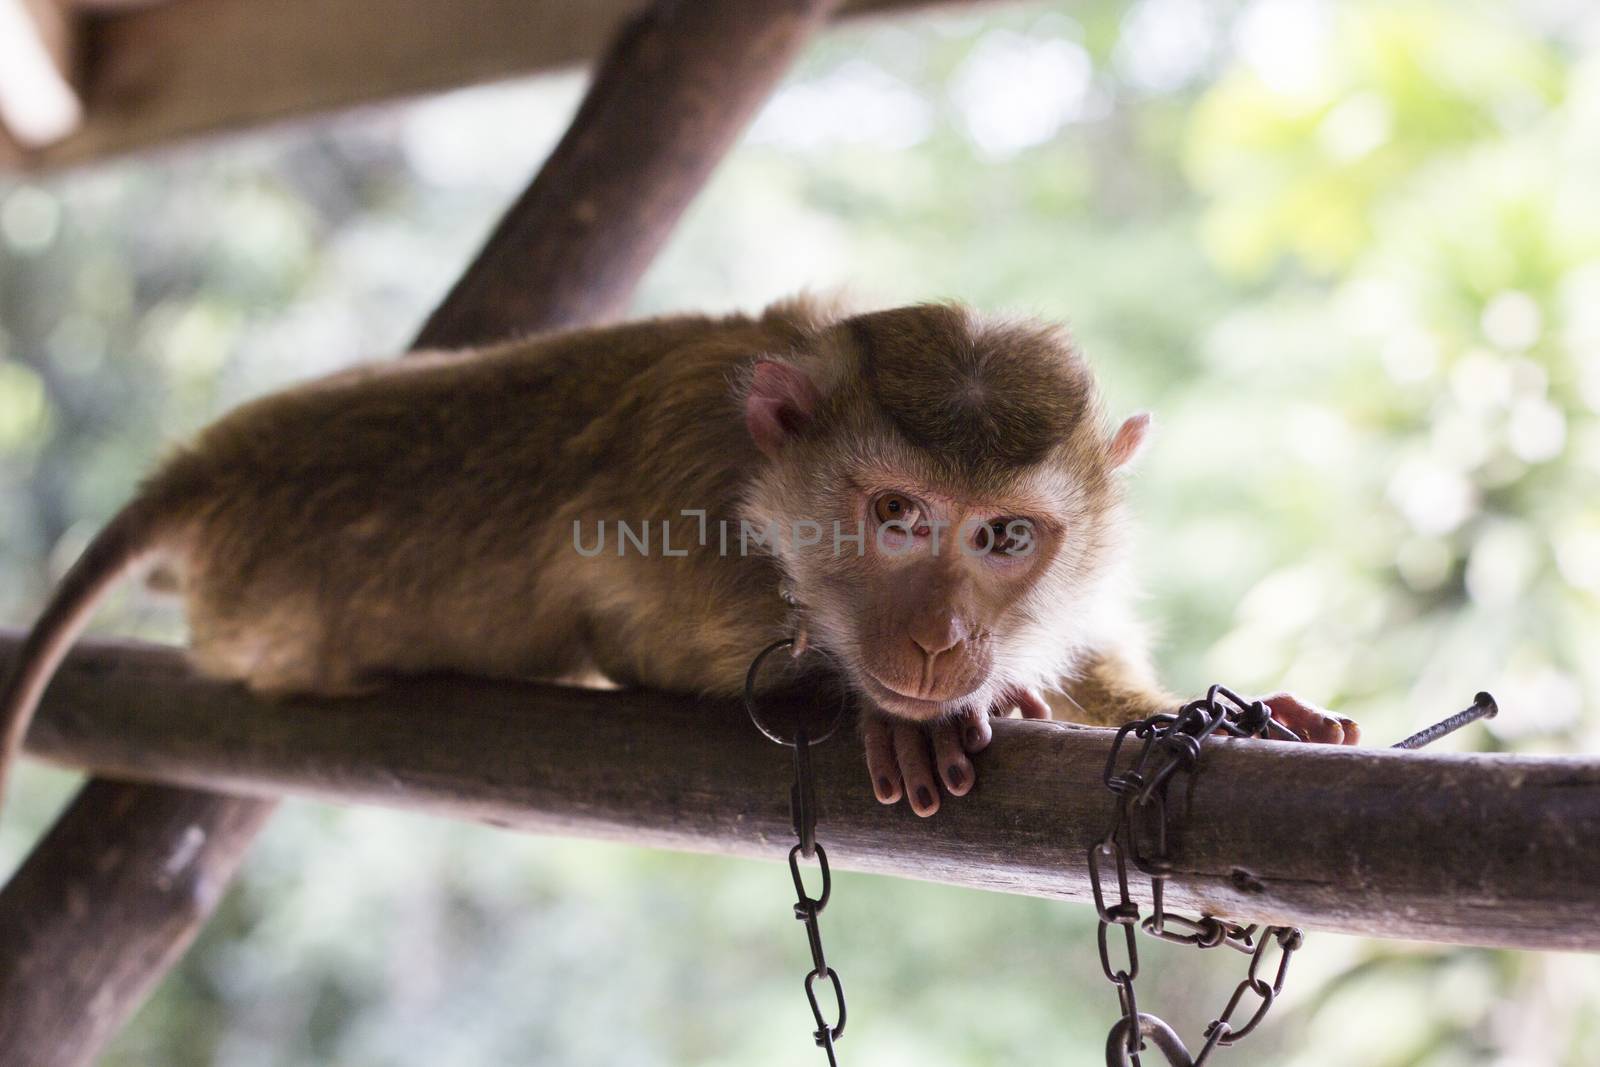 Monkey in Chains by eswaran